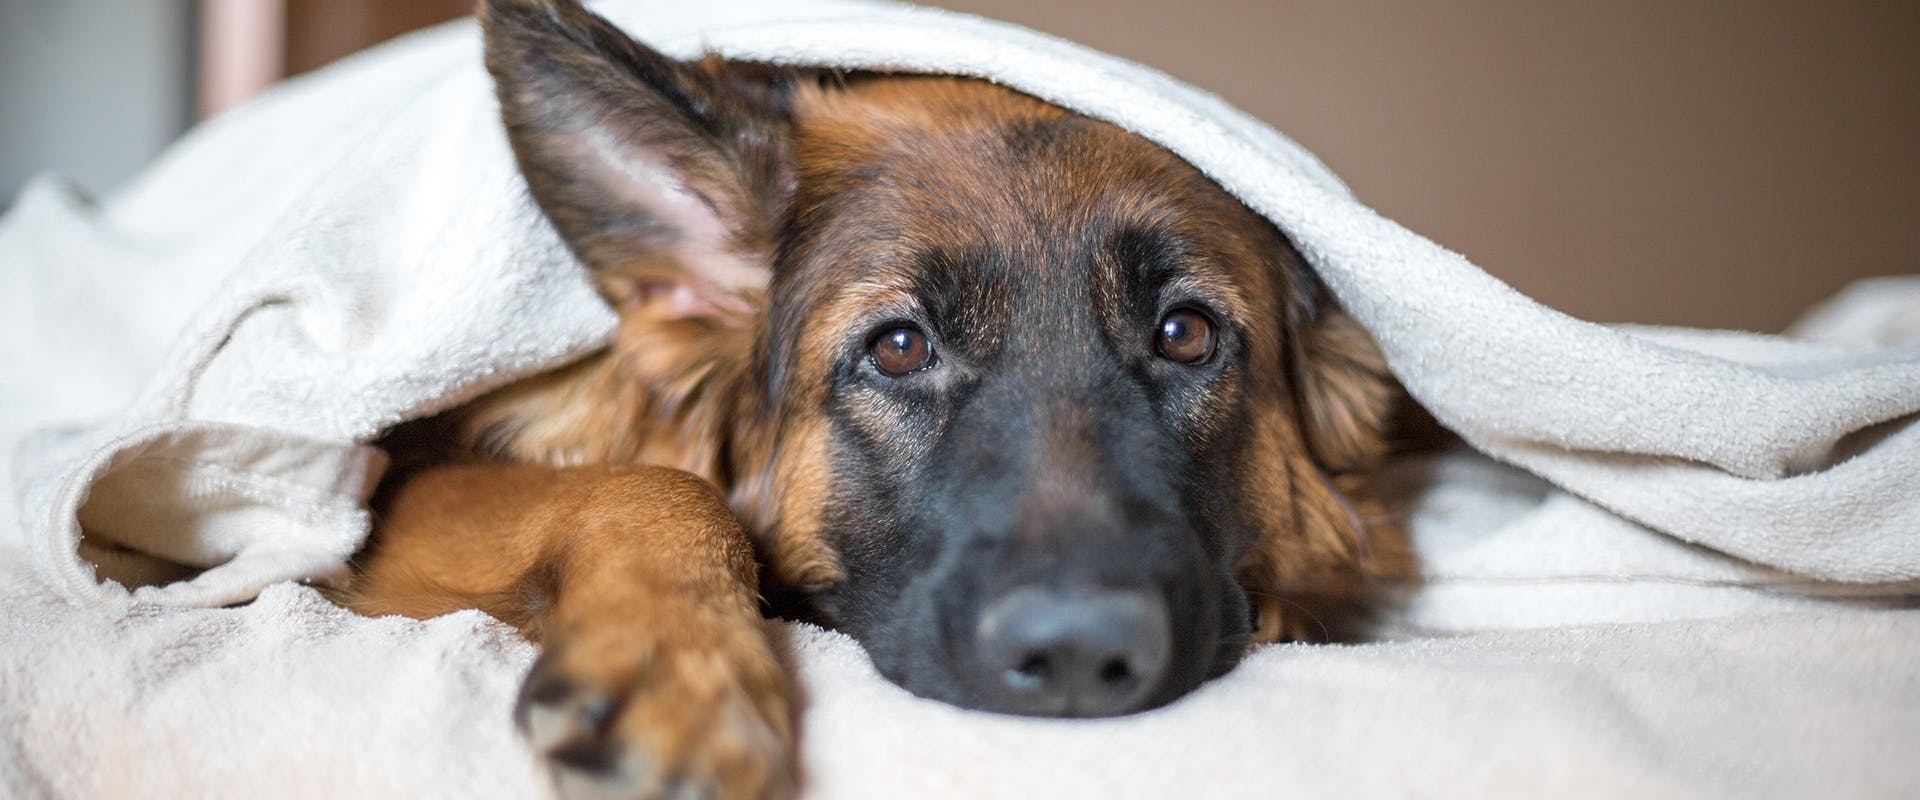 A German Shepherd dog sitting on a bed underneath a blanket